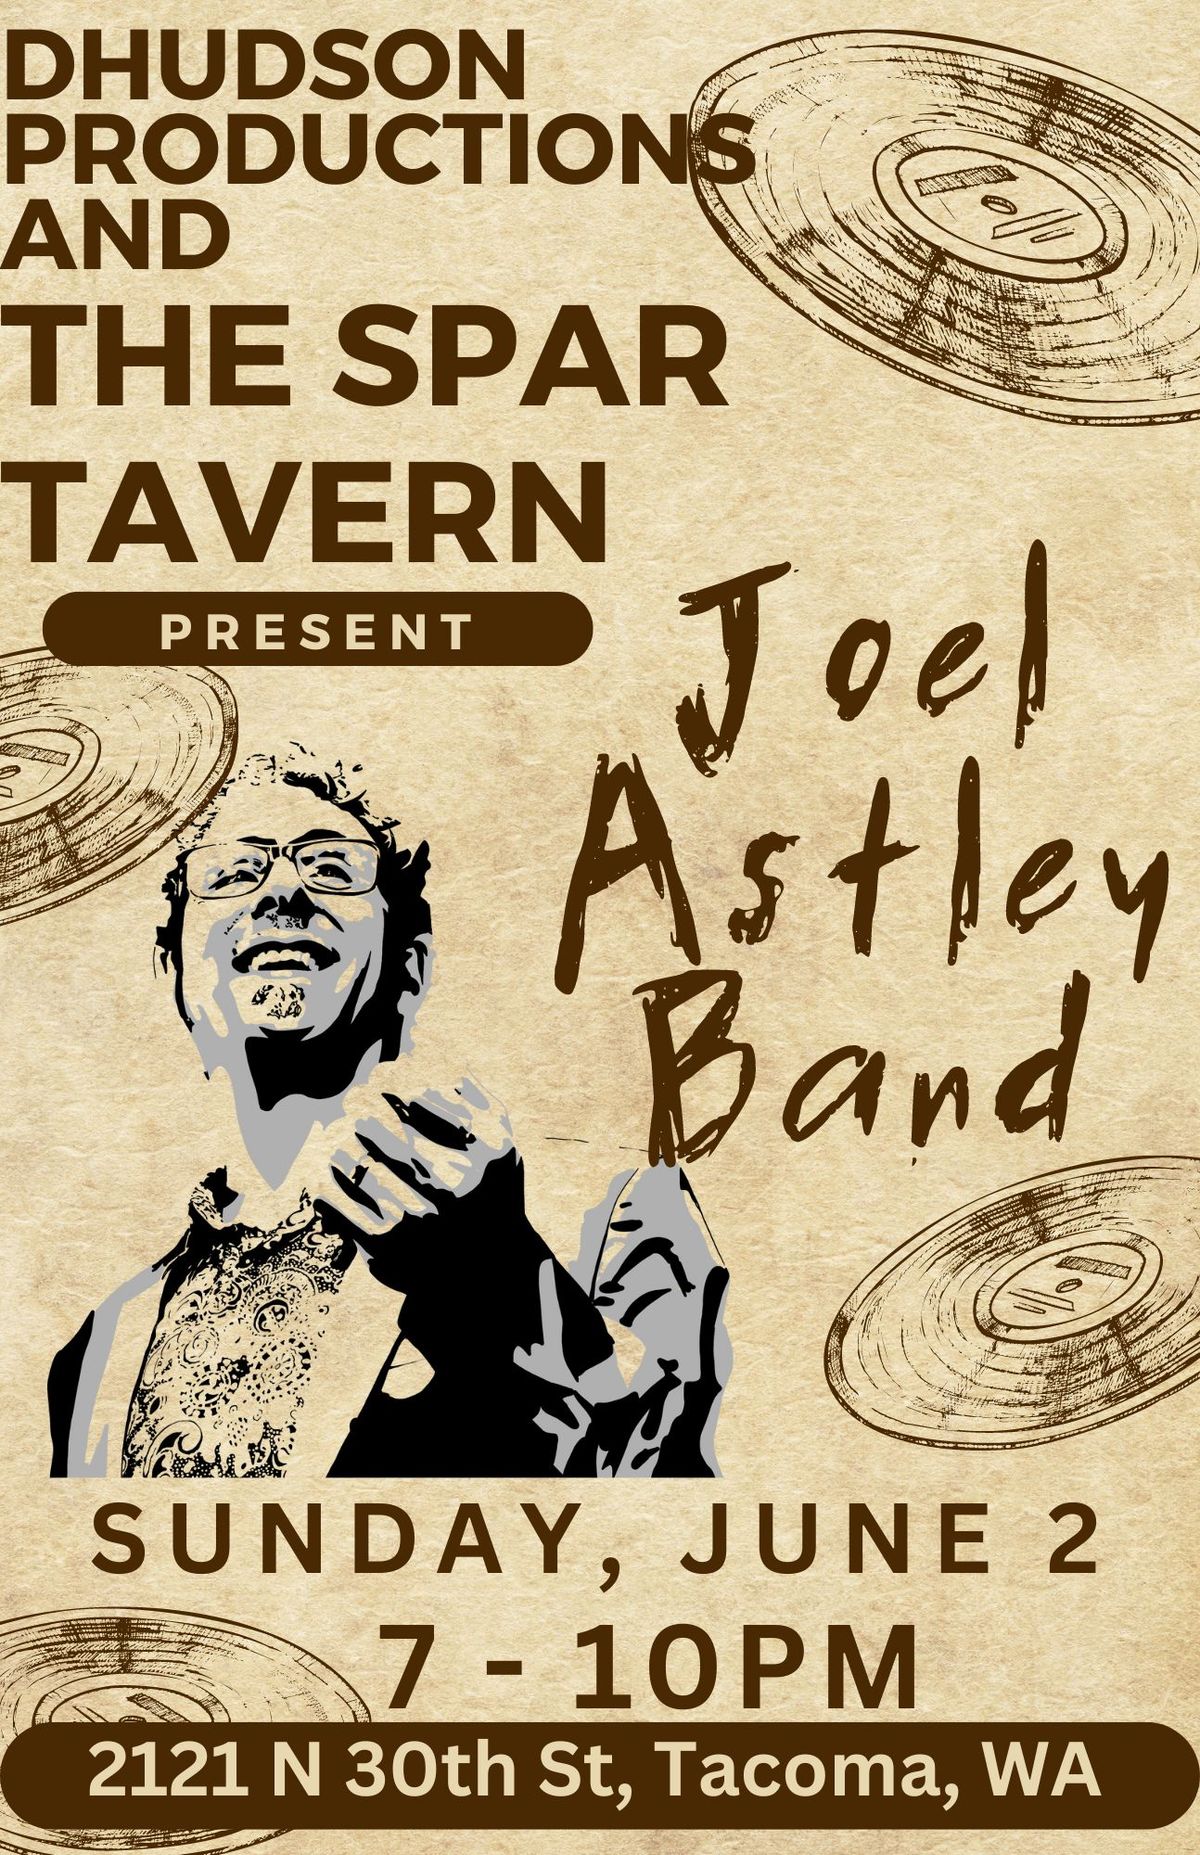 SUNDAY BLUES at The Spar: Joel Astley Band